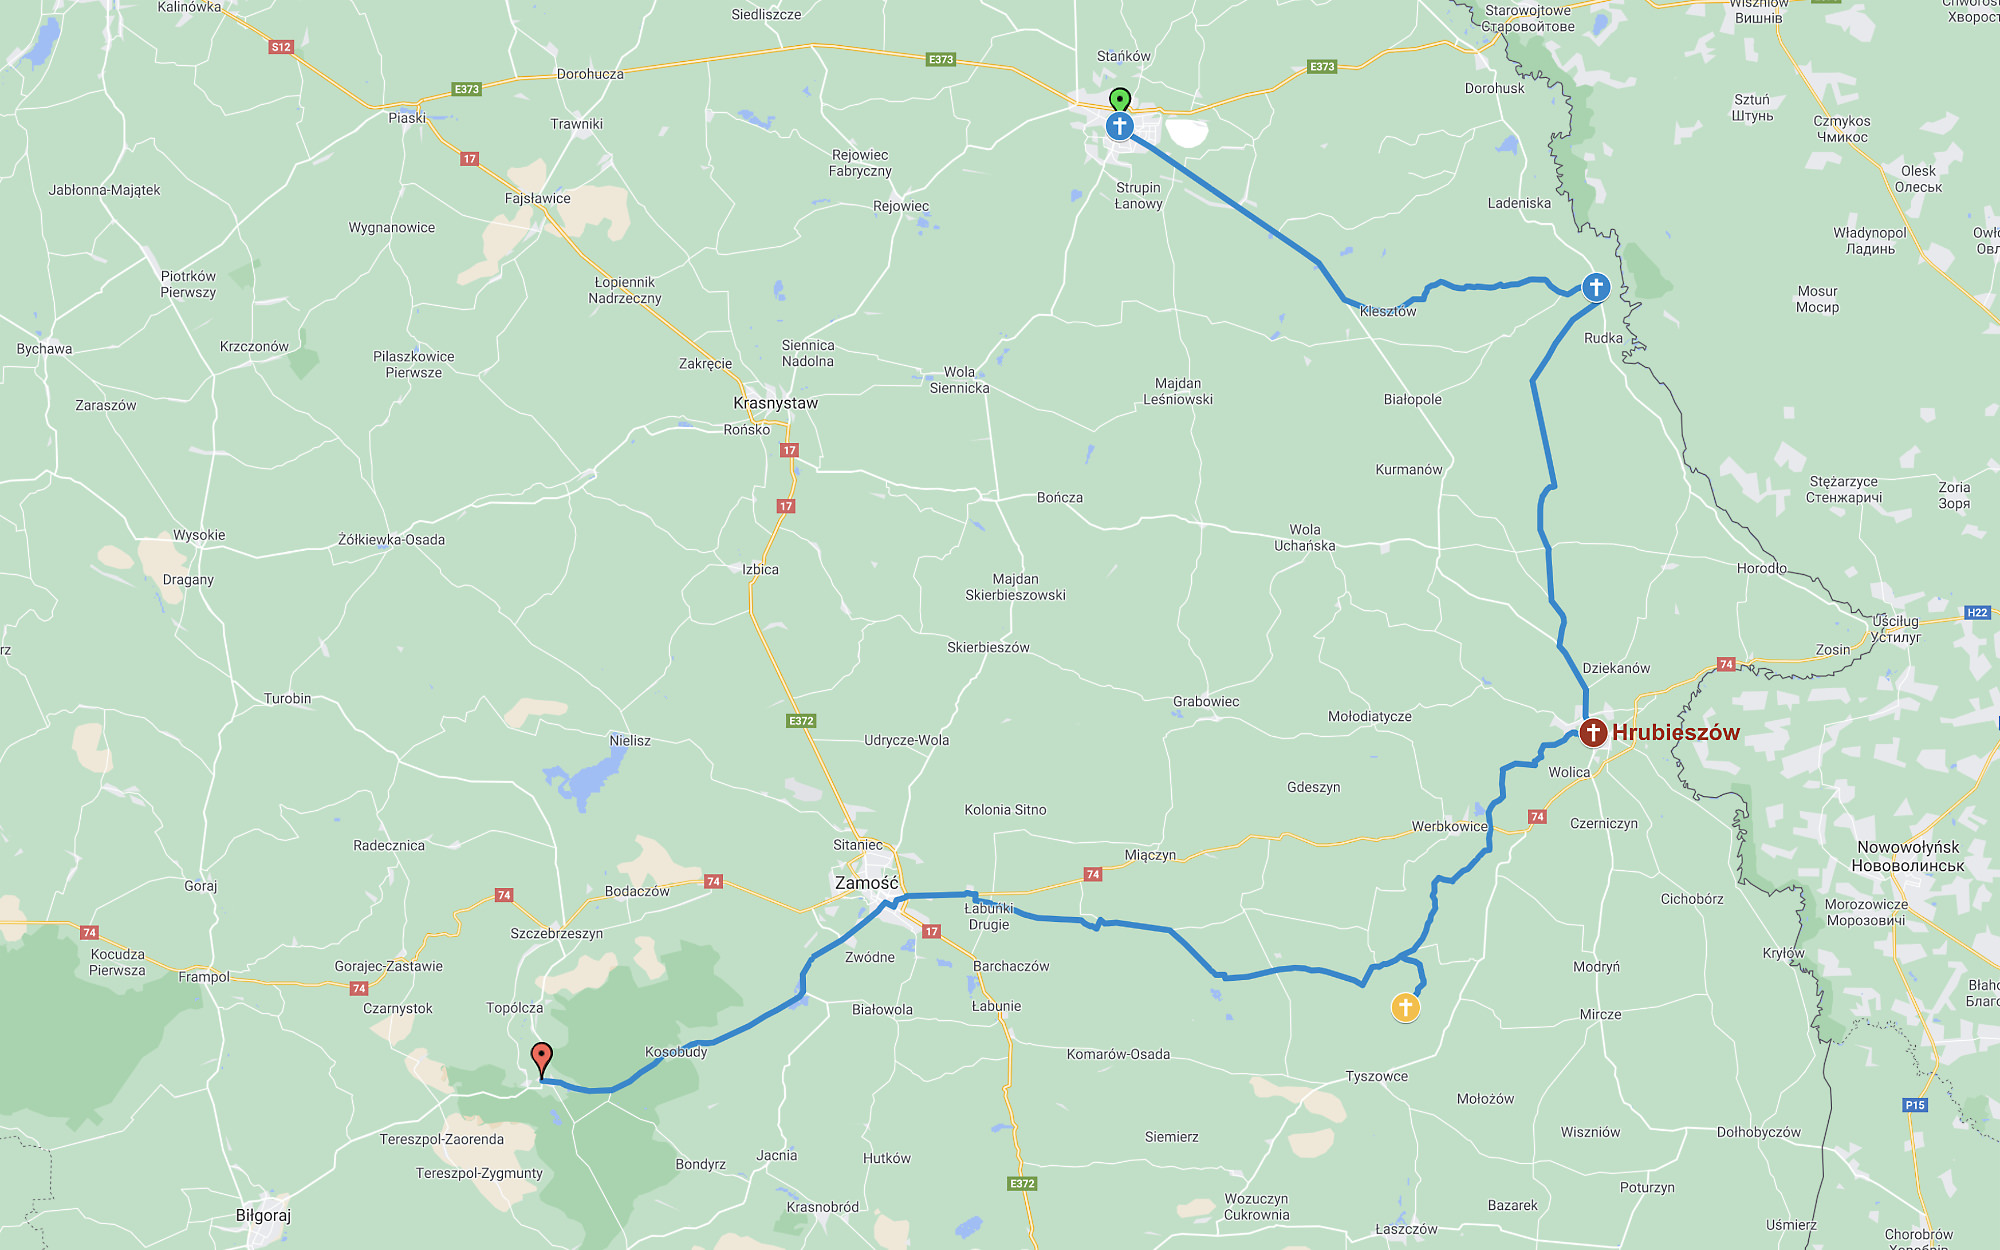 Cycling route - Hrubieszow